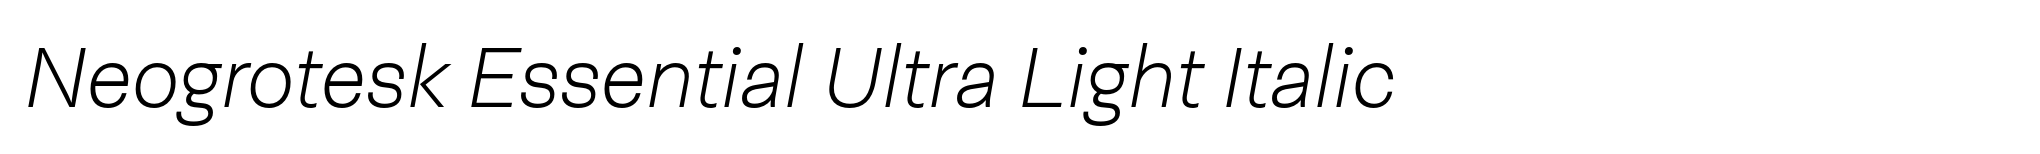 Neogrotesk Essential Ultra Light Italic image